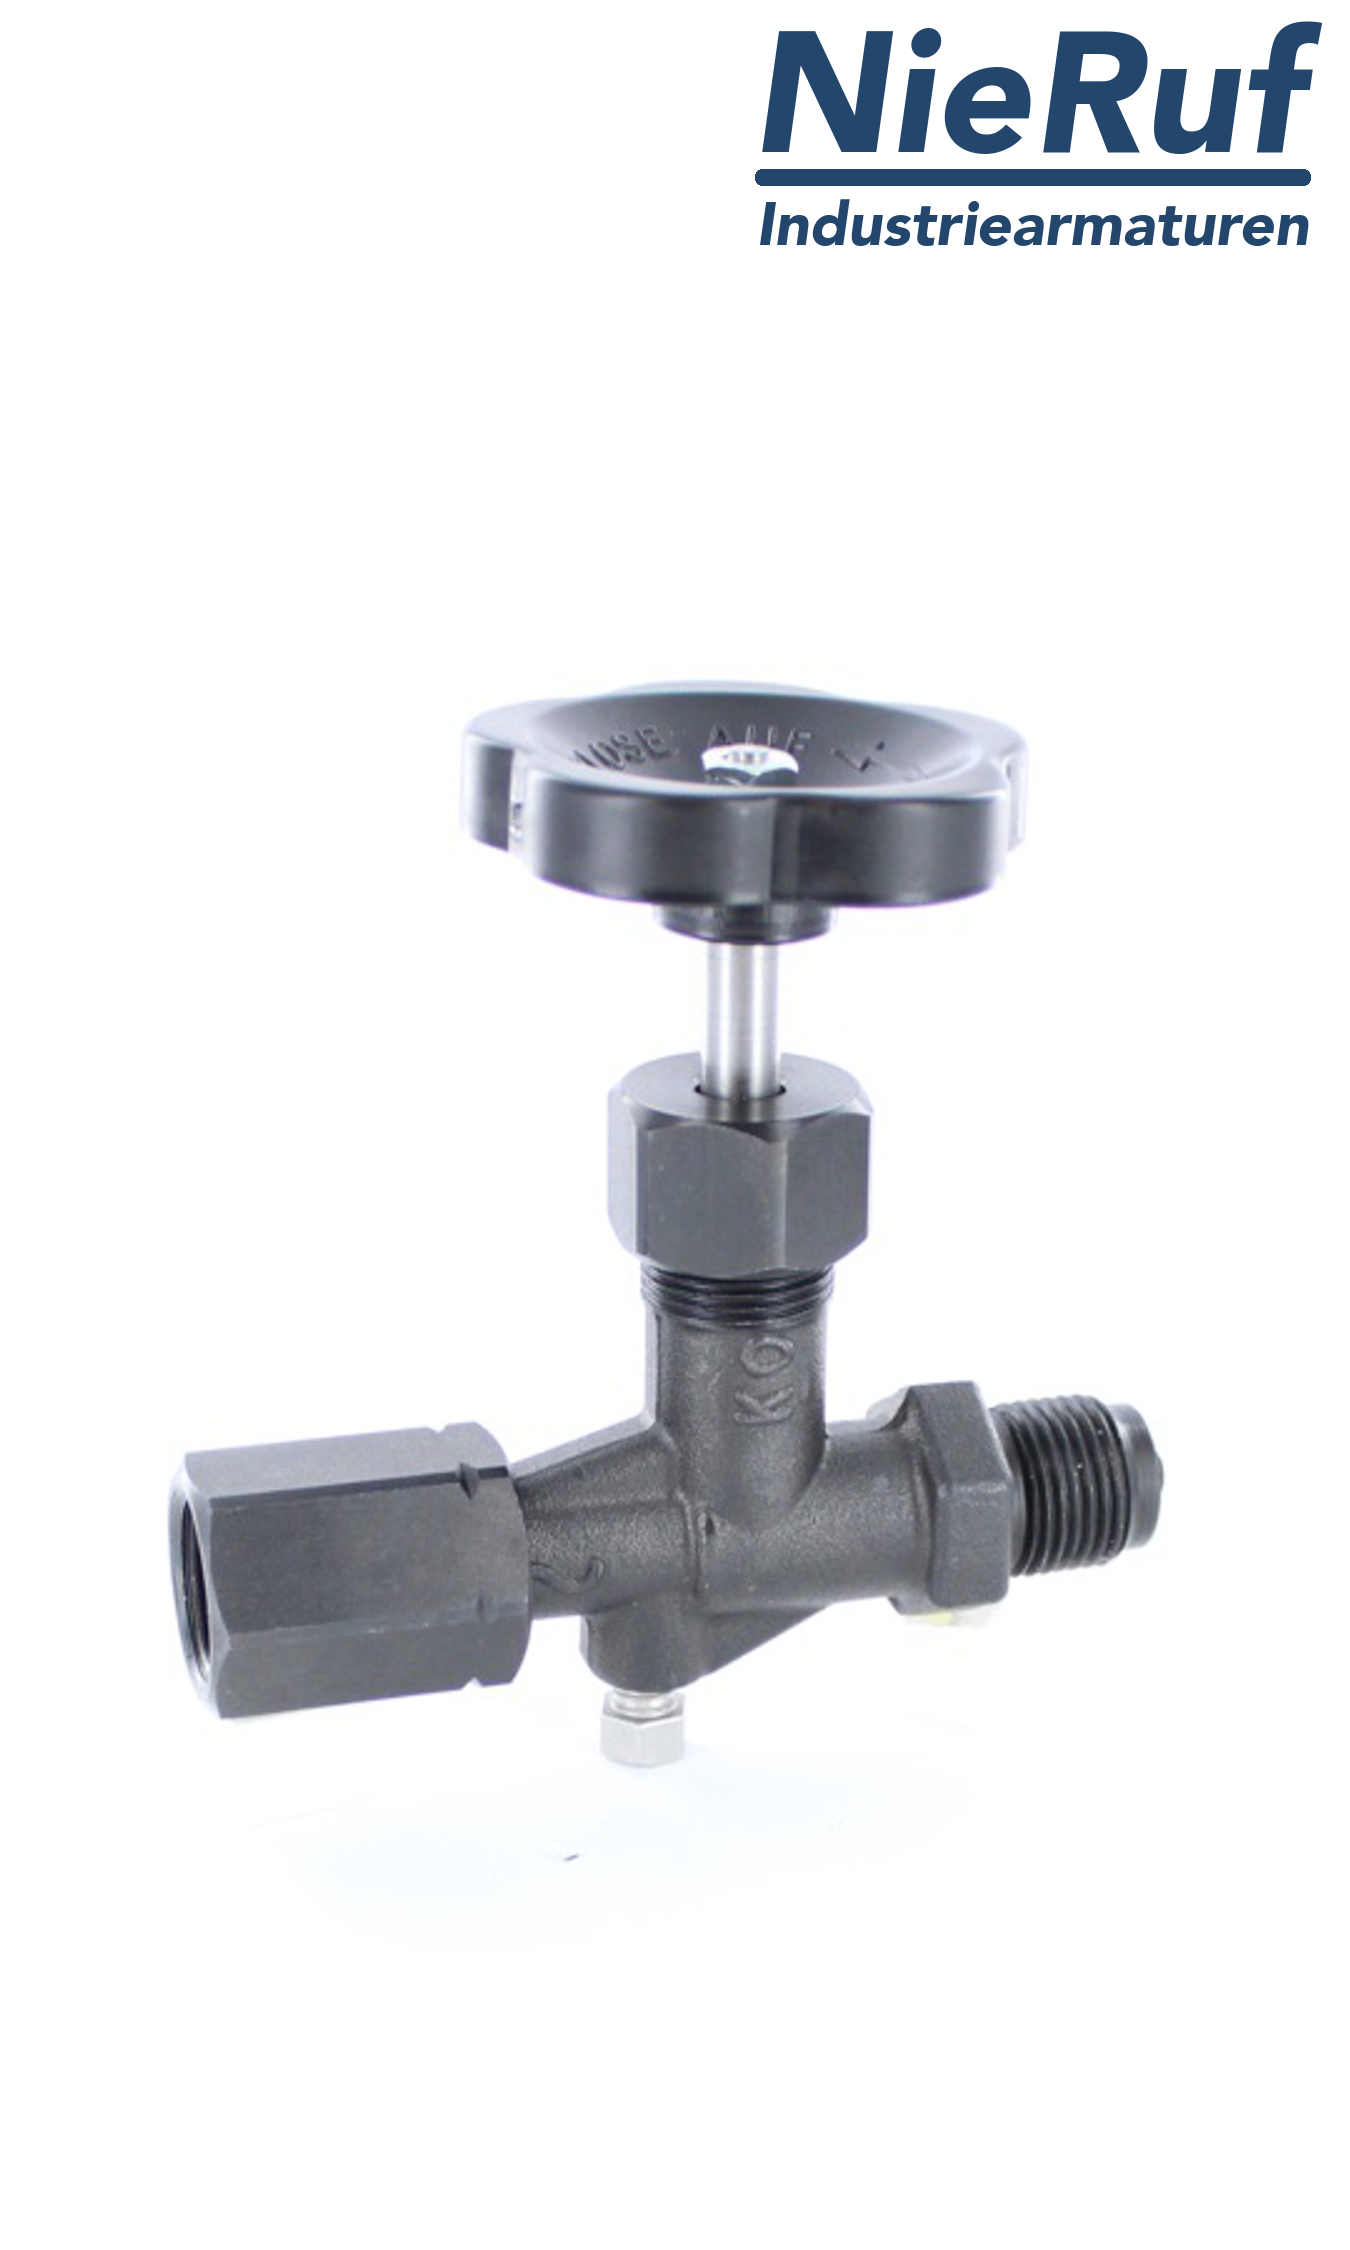 manometer gauge valves male thread x sleeve DIN 16270 steel 1.0460 400 bar